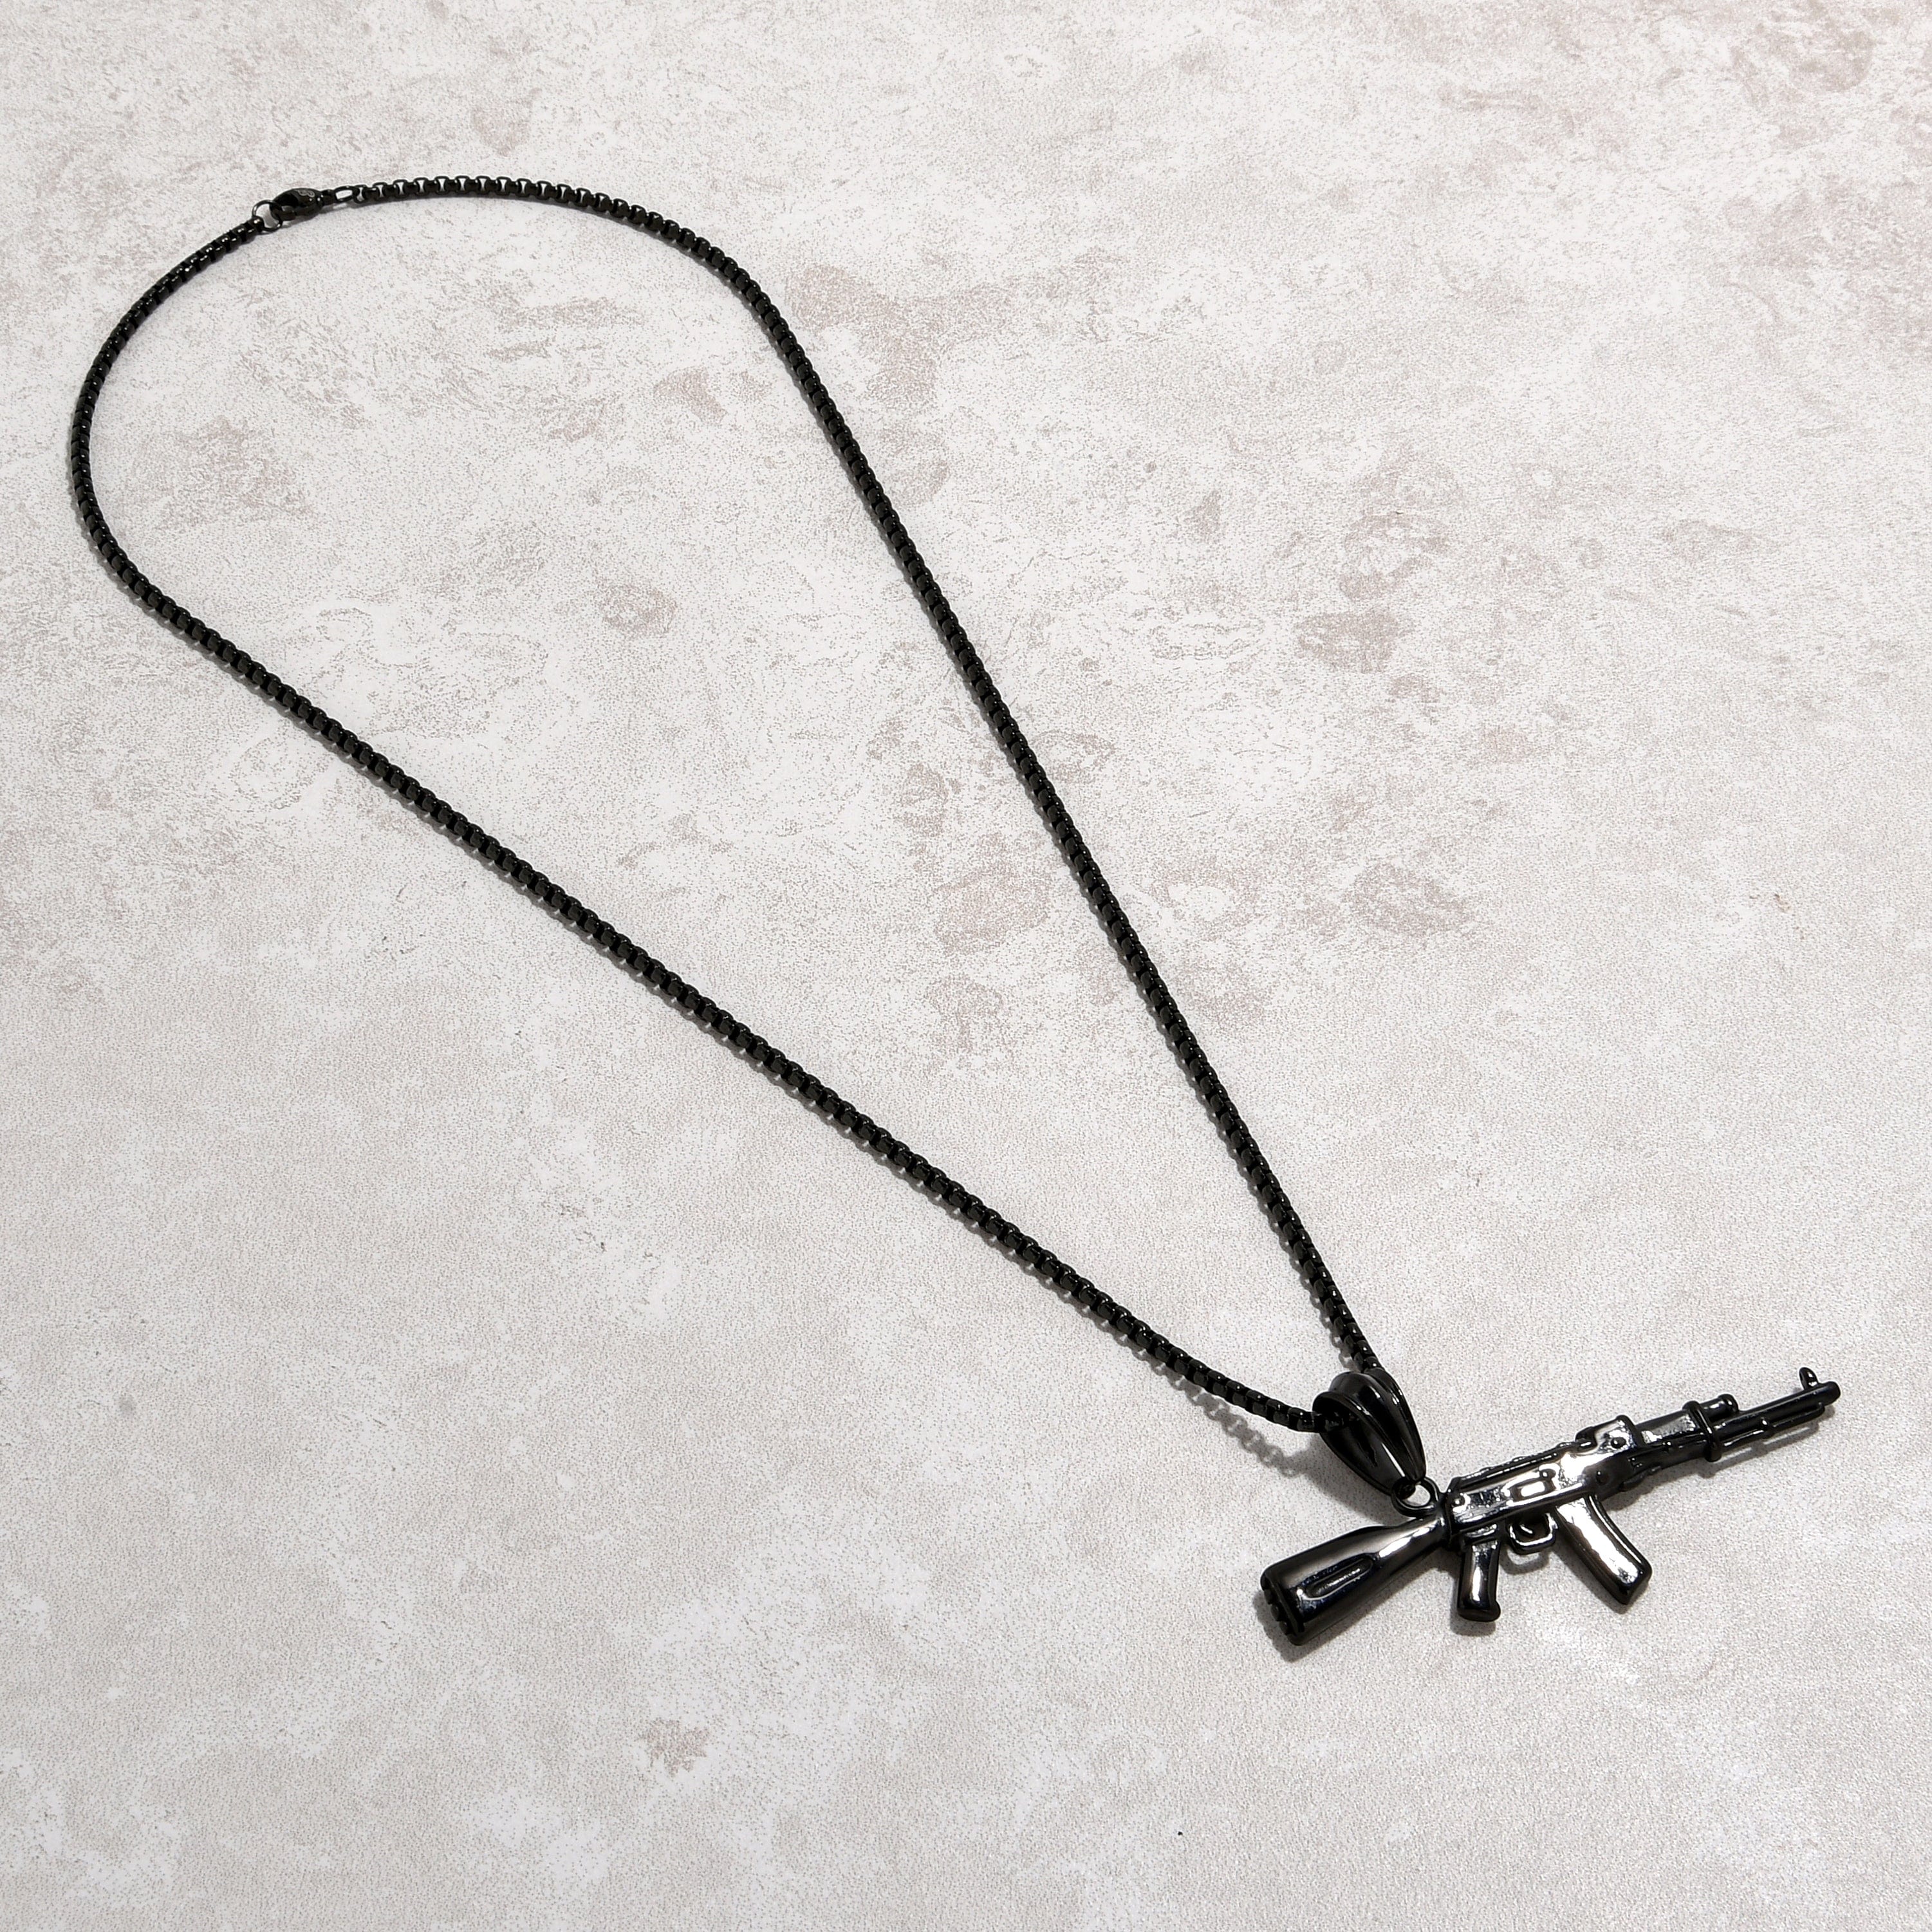 Kalifano Steel Hearts Jewelry Black AK-47 Gun Steel Hearts Necklace SHN518-B